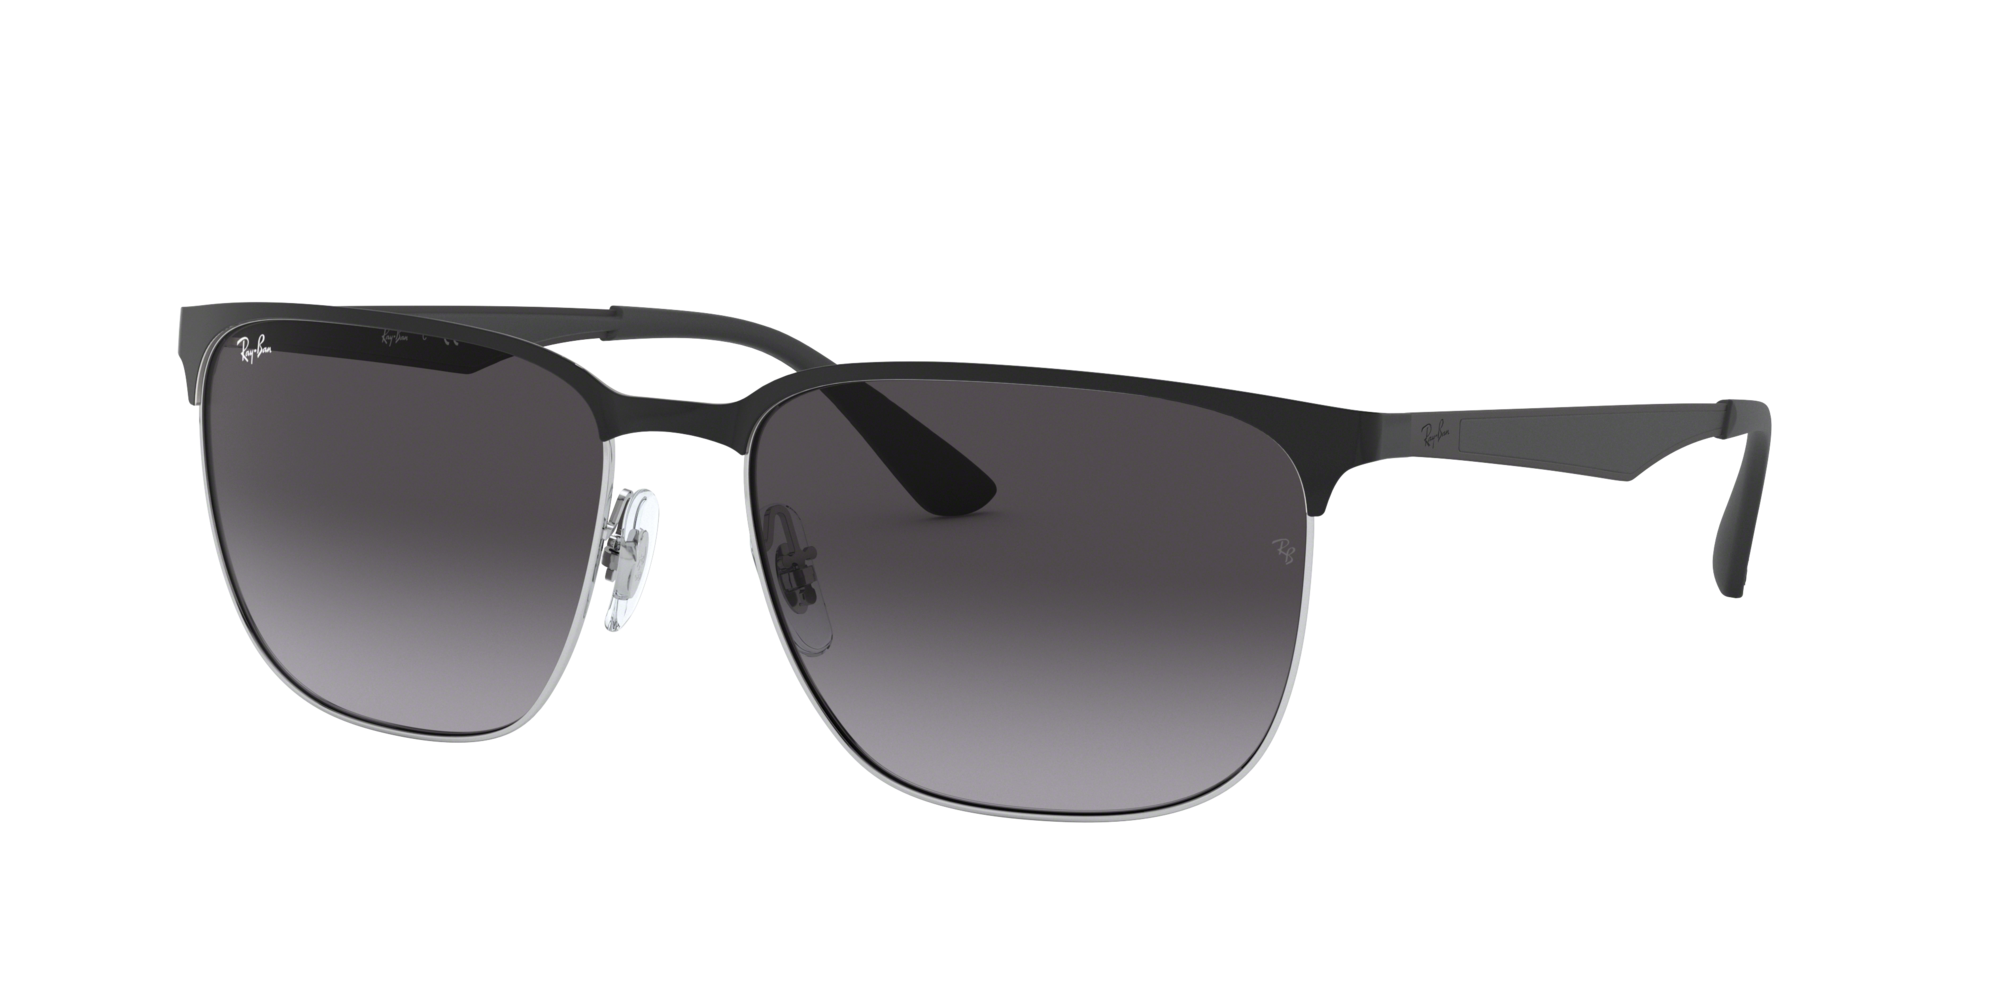 Angle_Left01 Ray-Ban RB 3569 (90048G) Sunglasses Grey / Silver